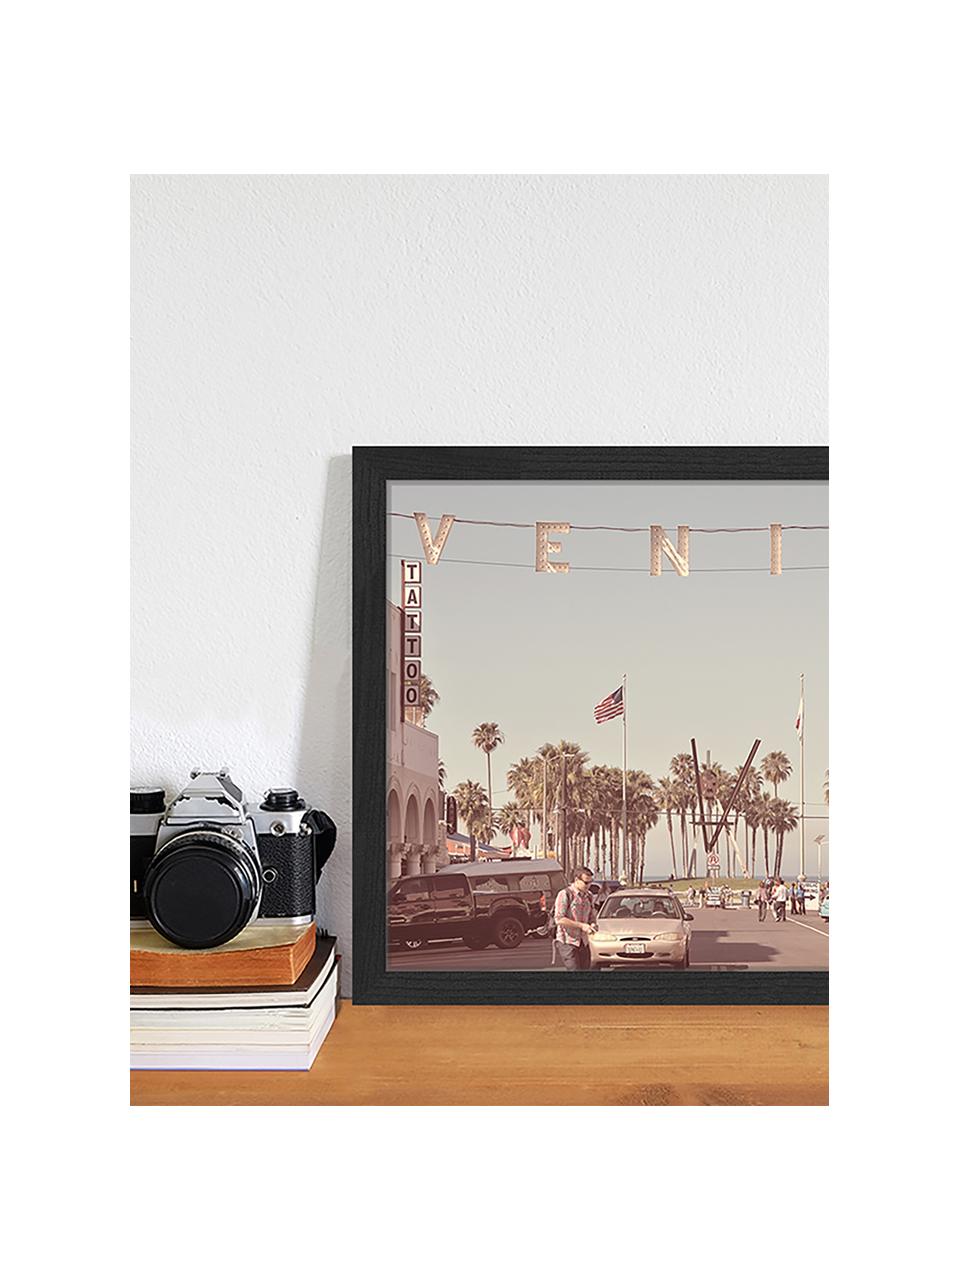 Stampa digitale incorniciata Venice Beach, Immagine: stampa digitale su carta,, Cornice: legno verniciato, Multicolore, Larg. 43 x Alt. 33 cm